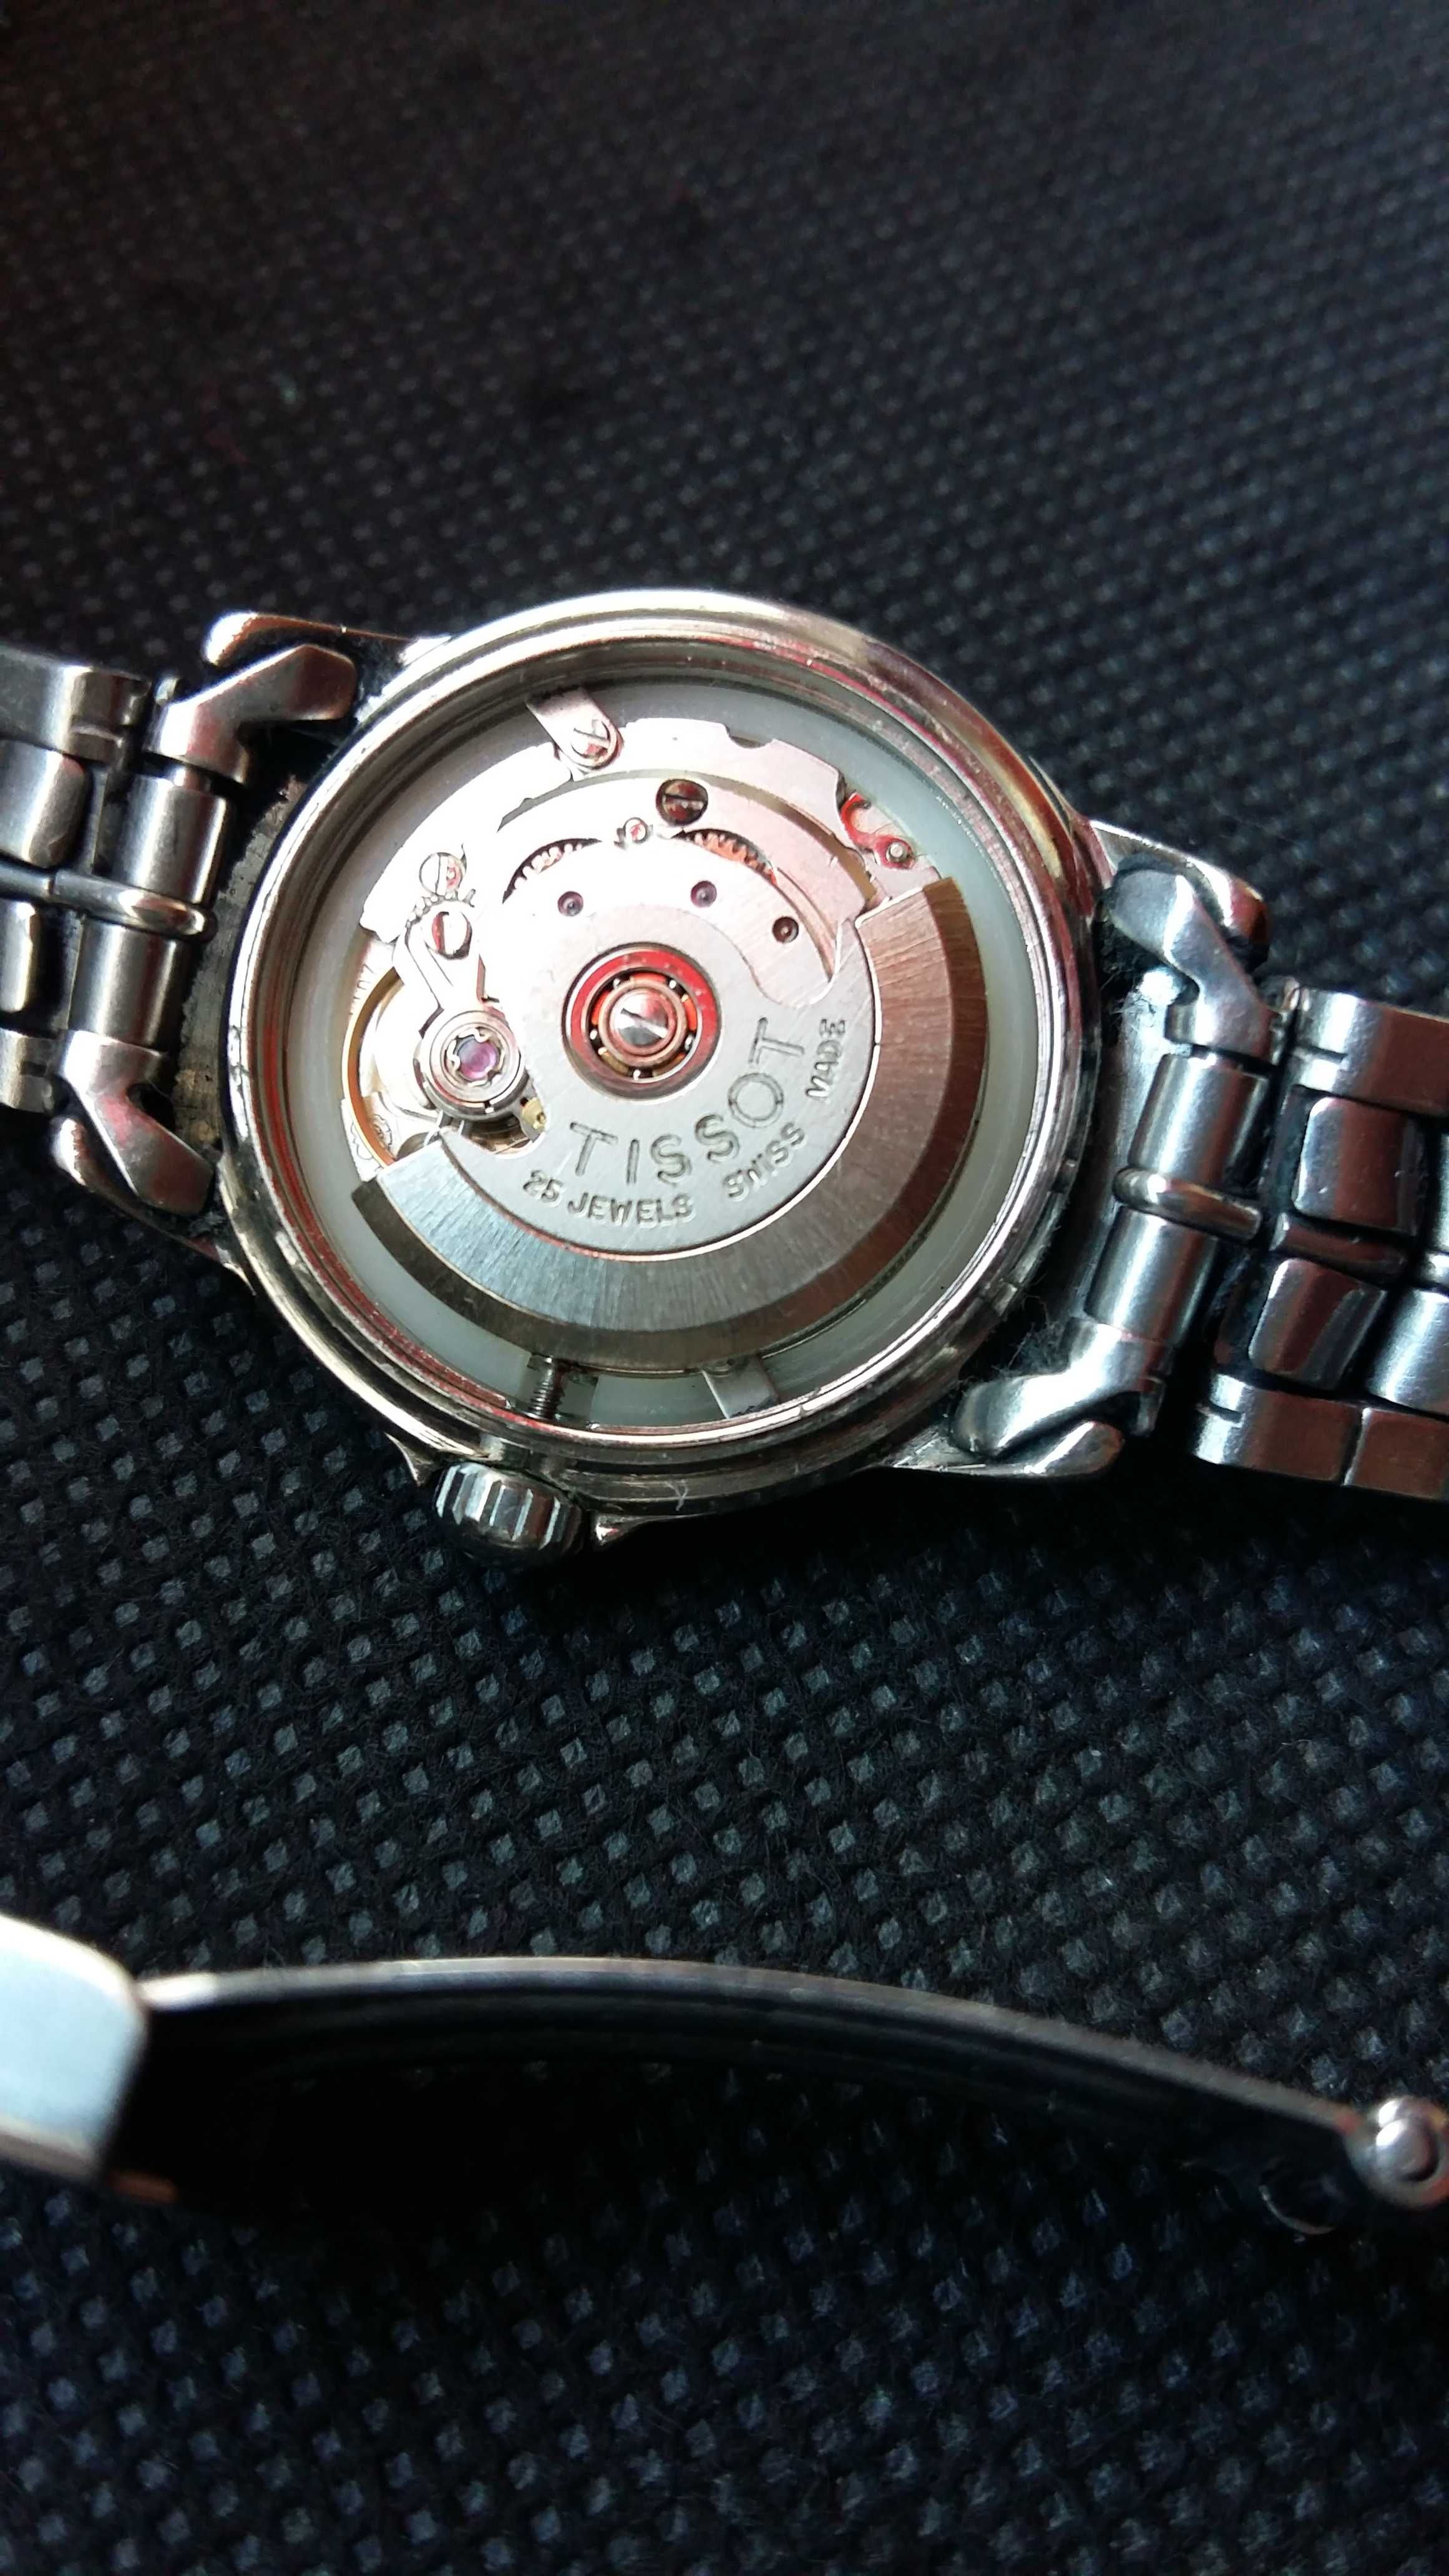 Zegarek Tissot Automatic 25 jewels ładny stan stal nie srebro.